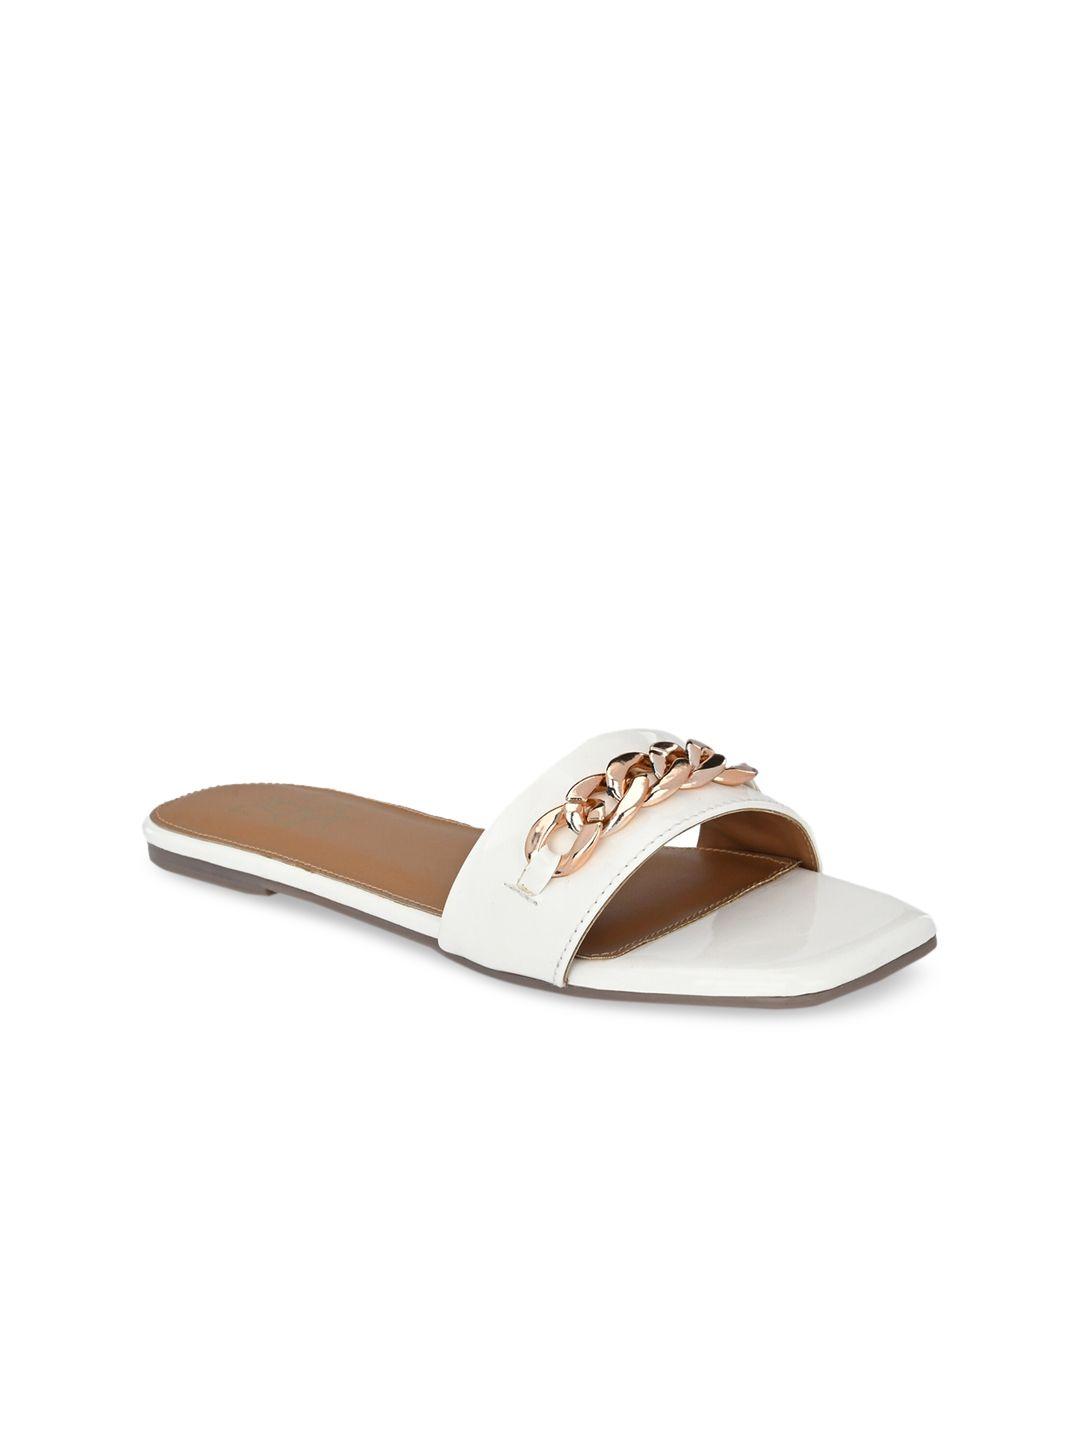 zebba women white embellished open toe flats